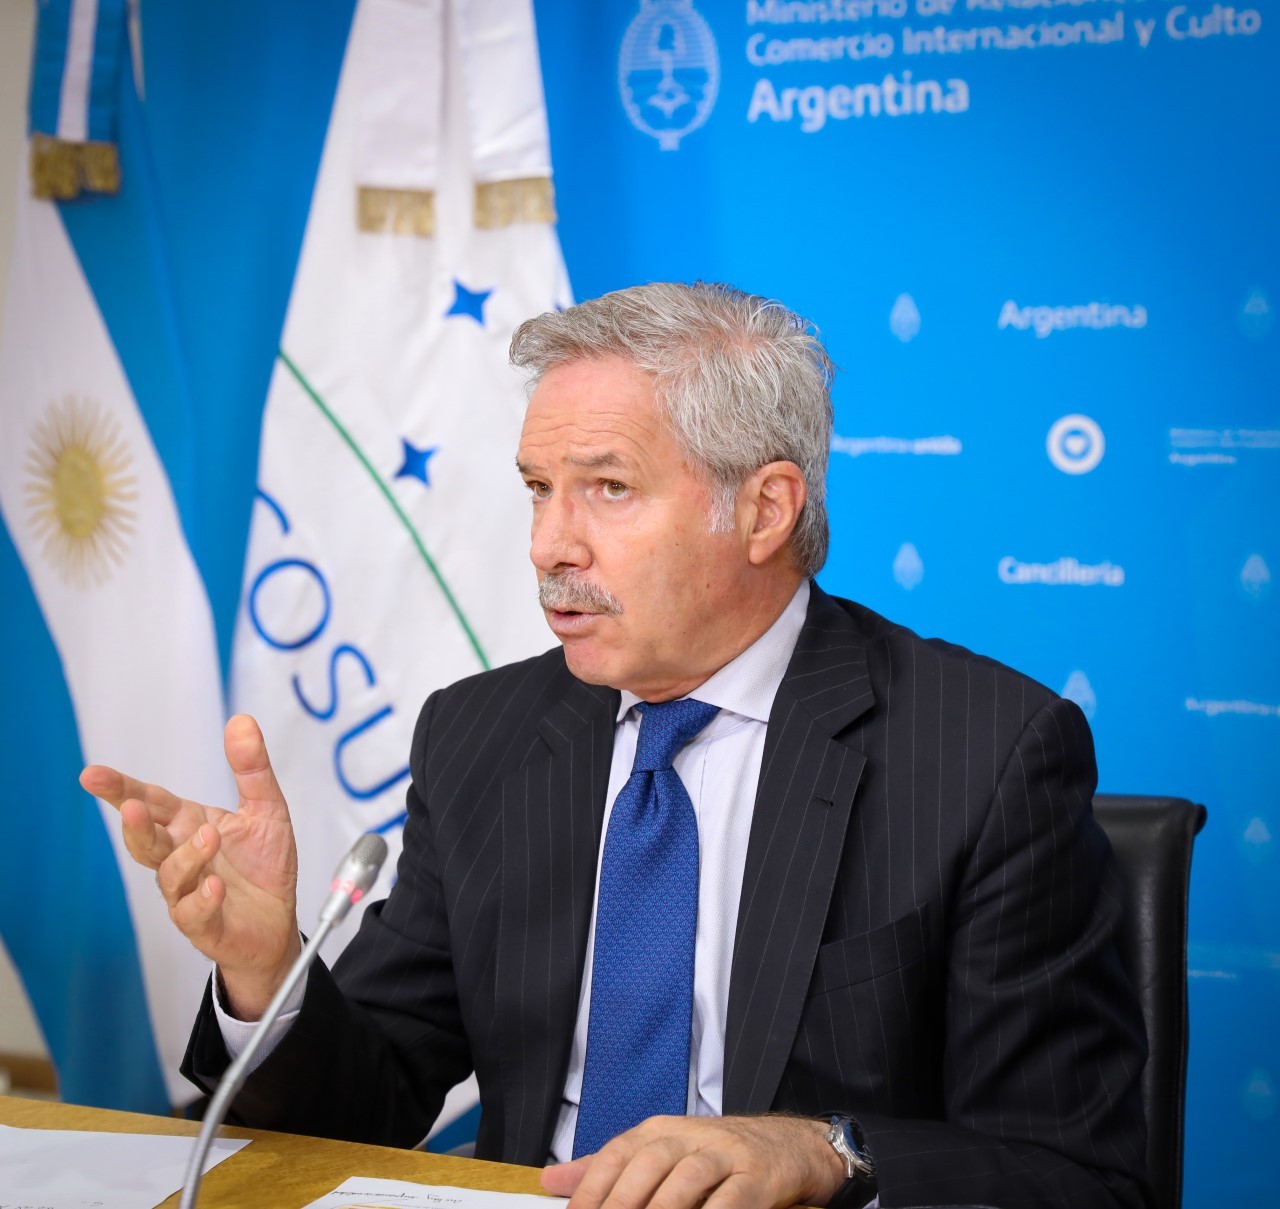 Felipe Solá. (Embassy of Argentina to Korea)